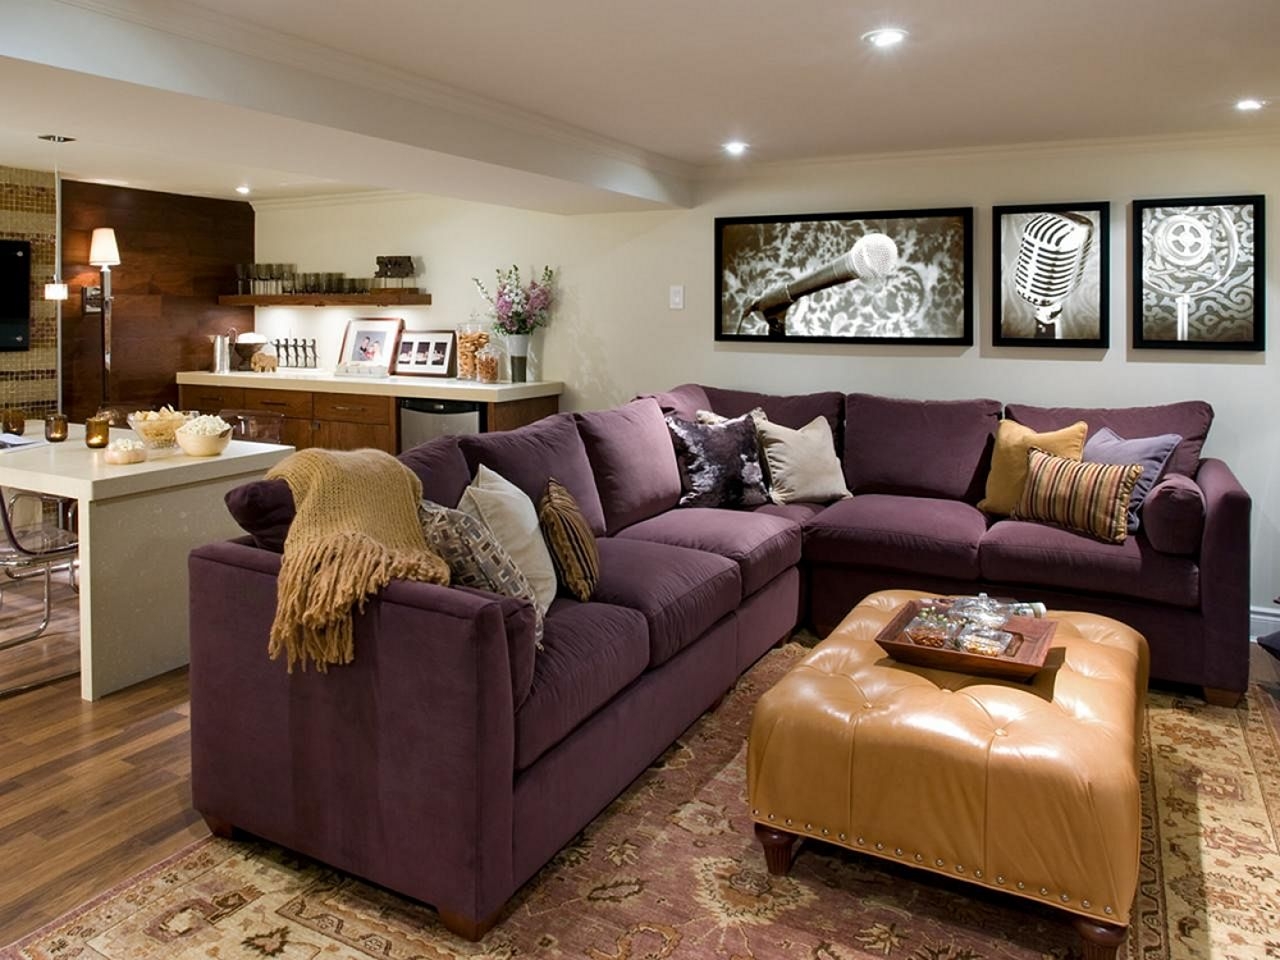 purple leather sofa ideas